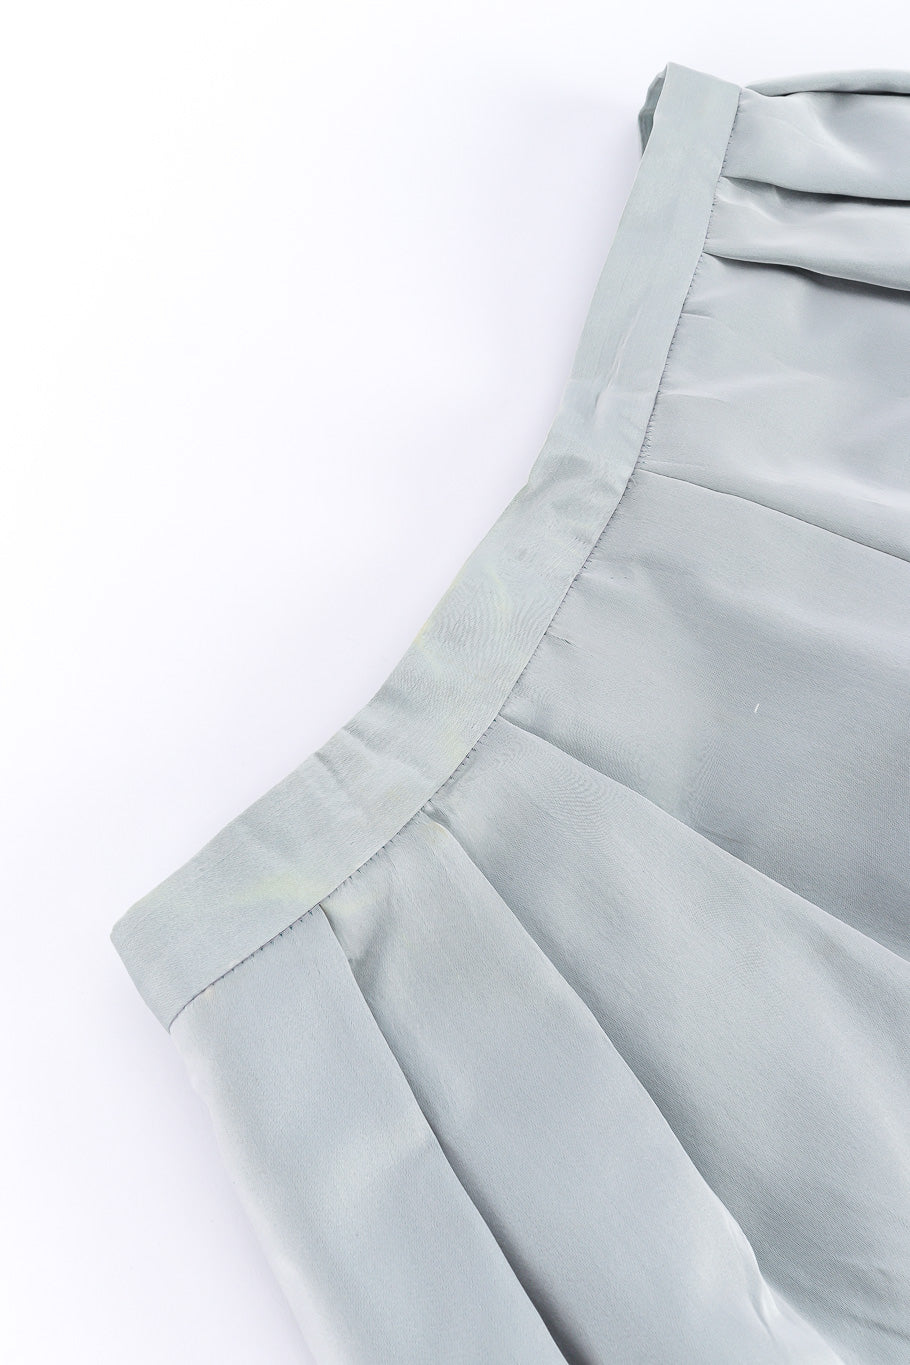 Corset, skirt, and shawl set by Christian La Croix skirt waistband @recessla